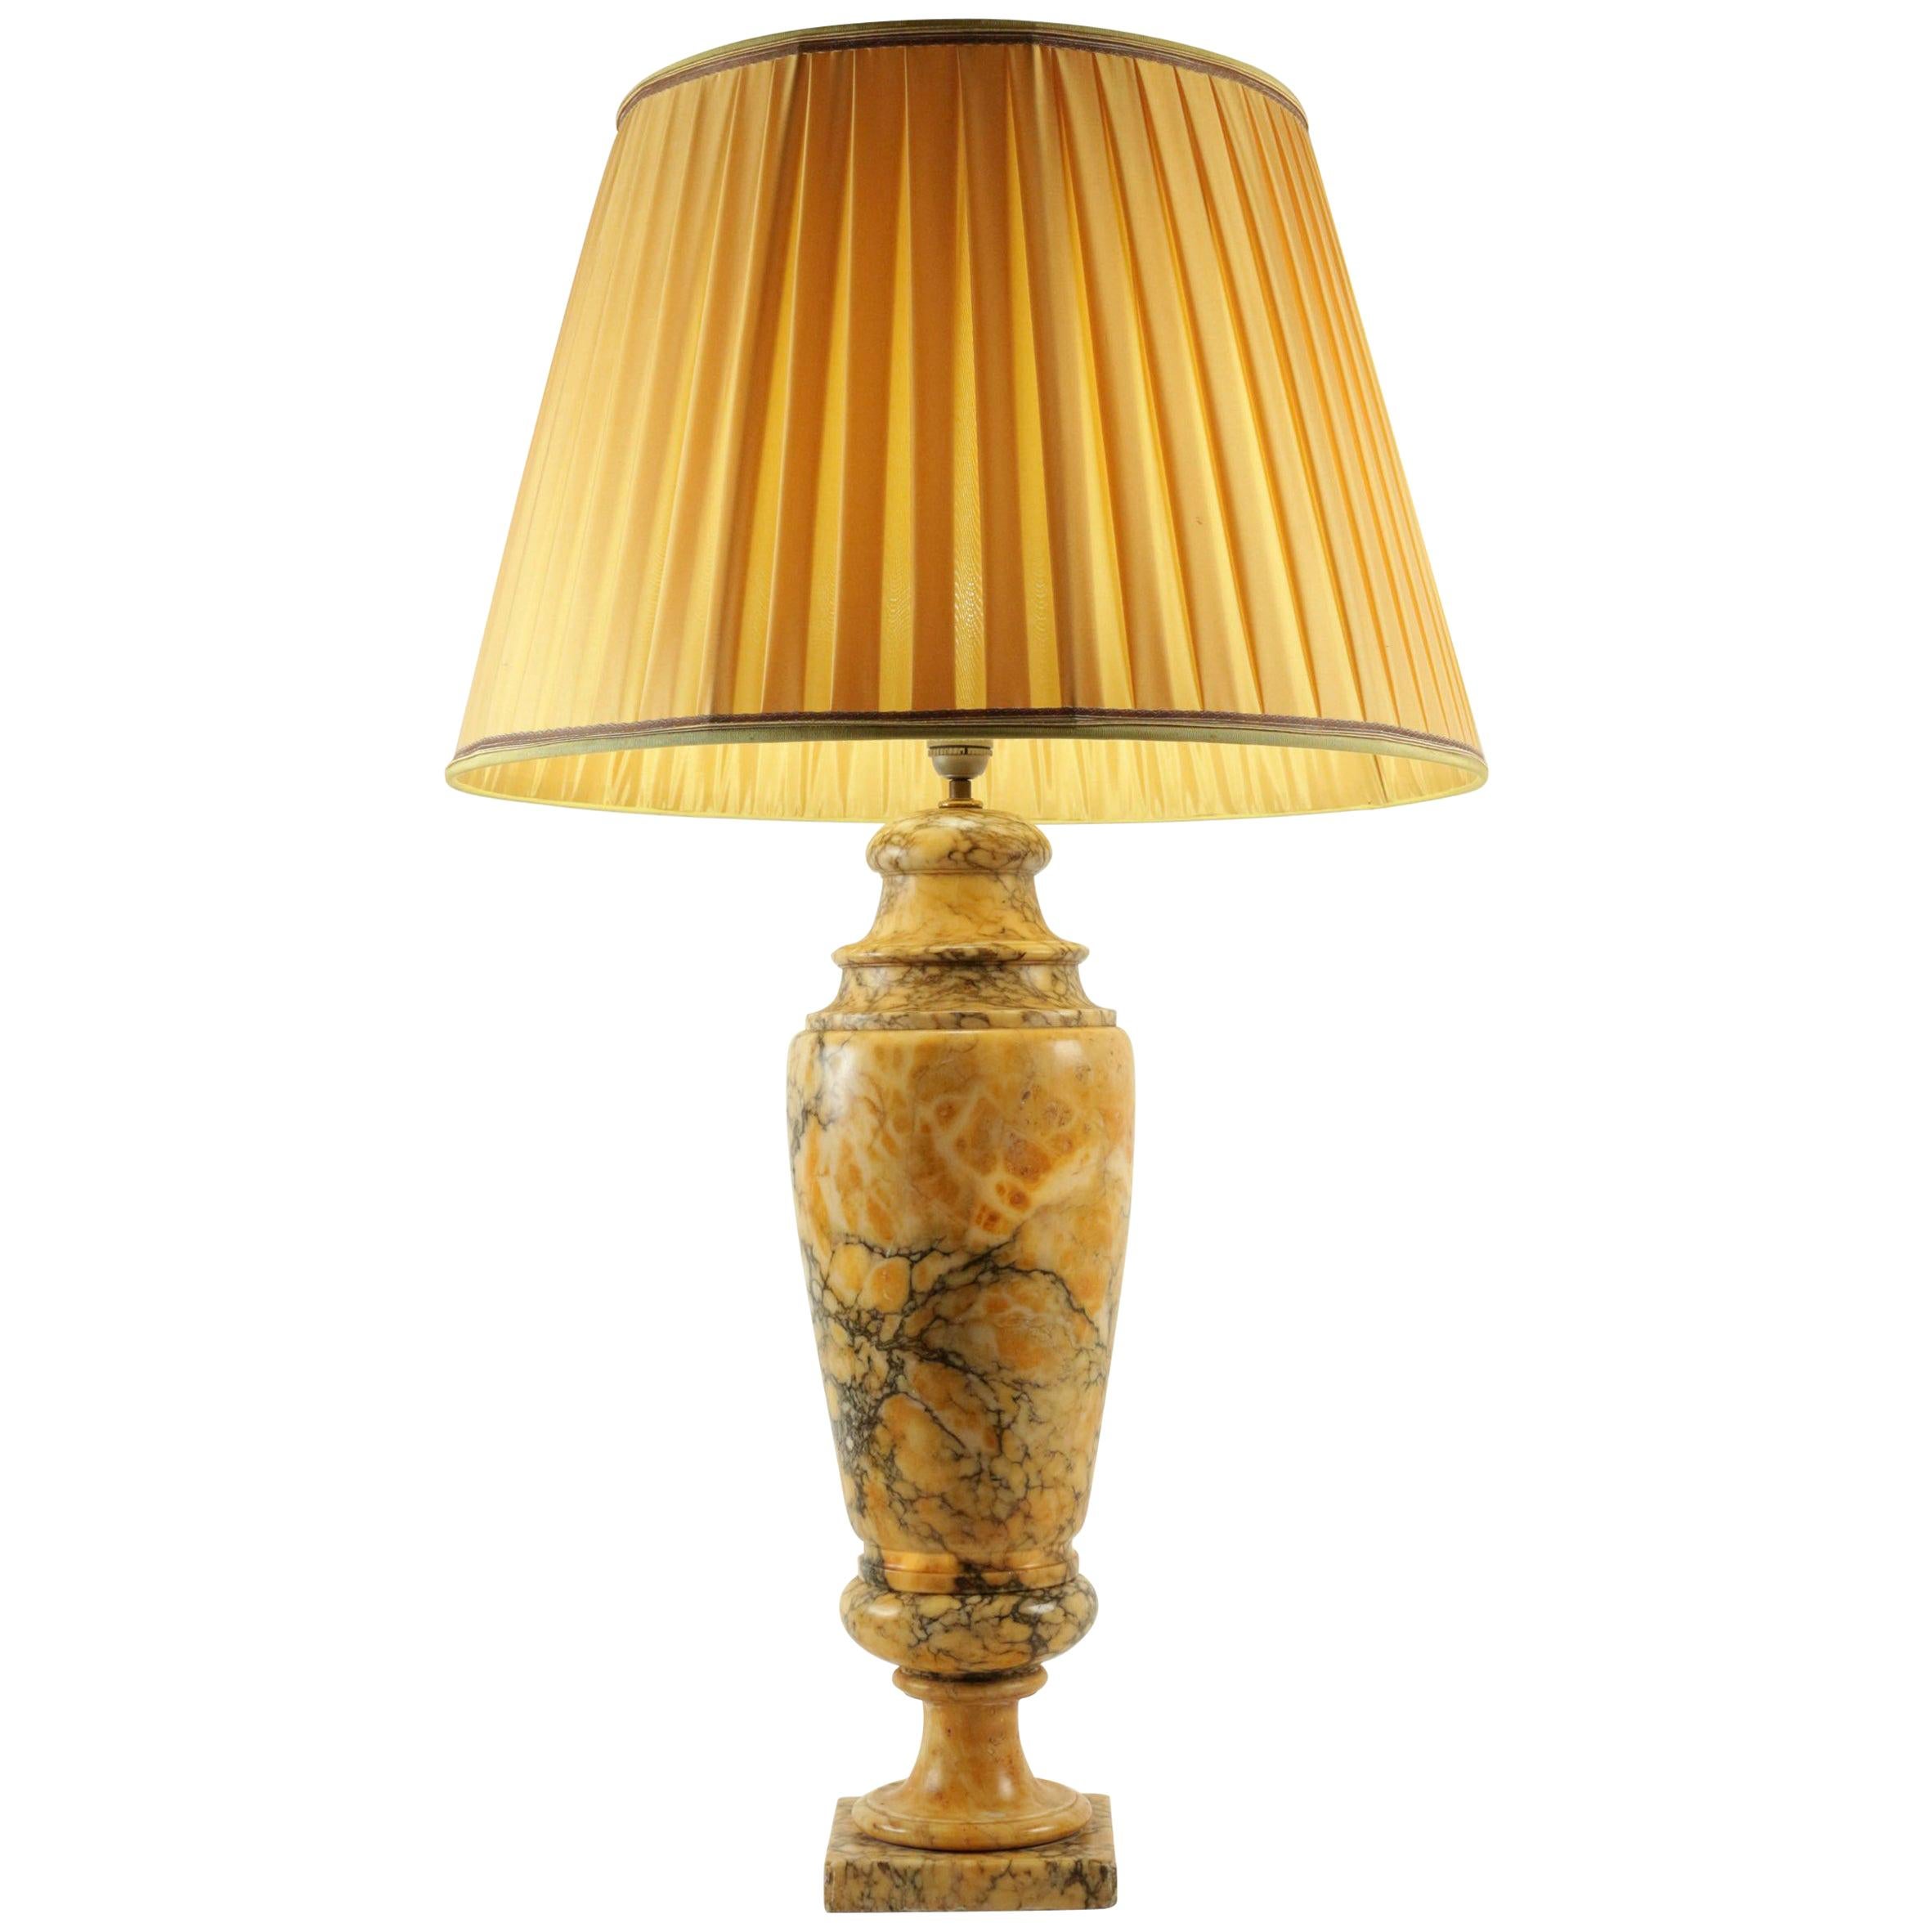 Important Alabaster Lampe Illuminated in the Interior and Exterior